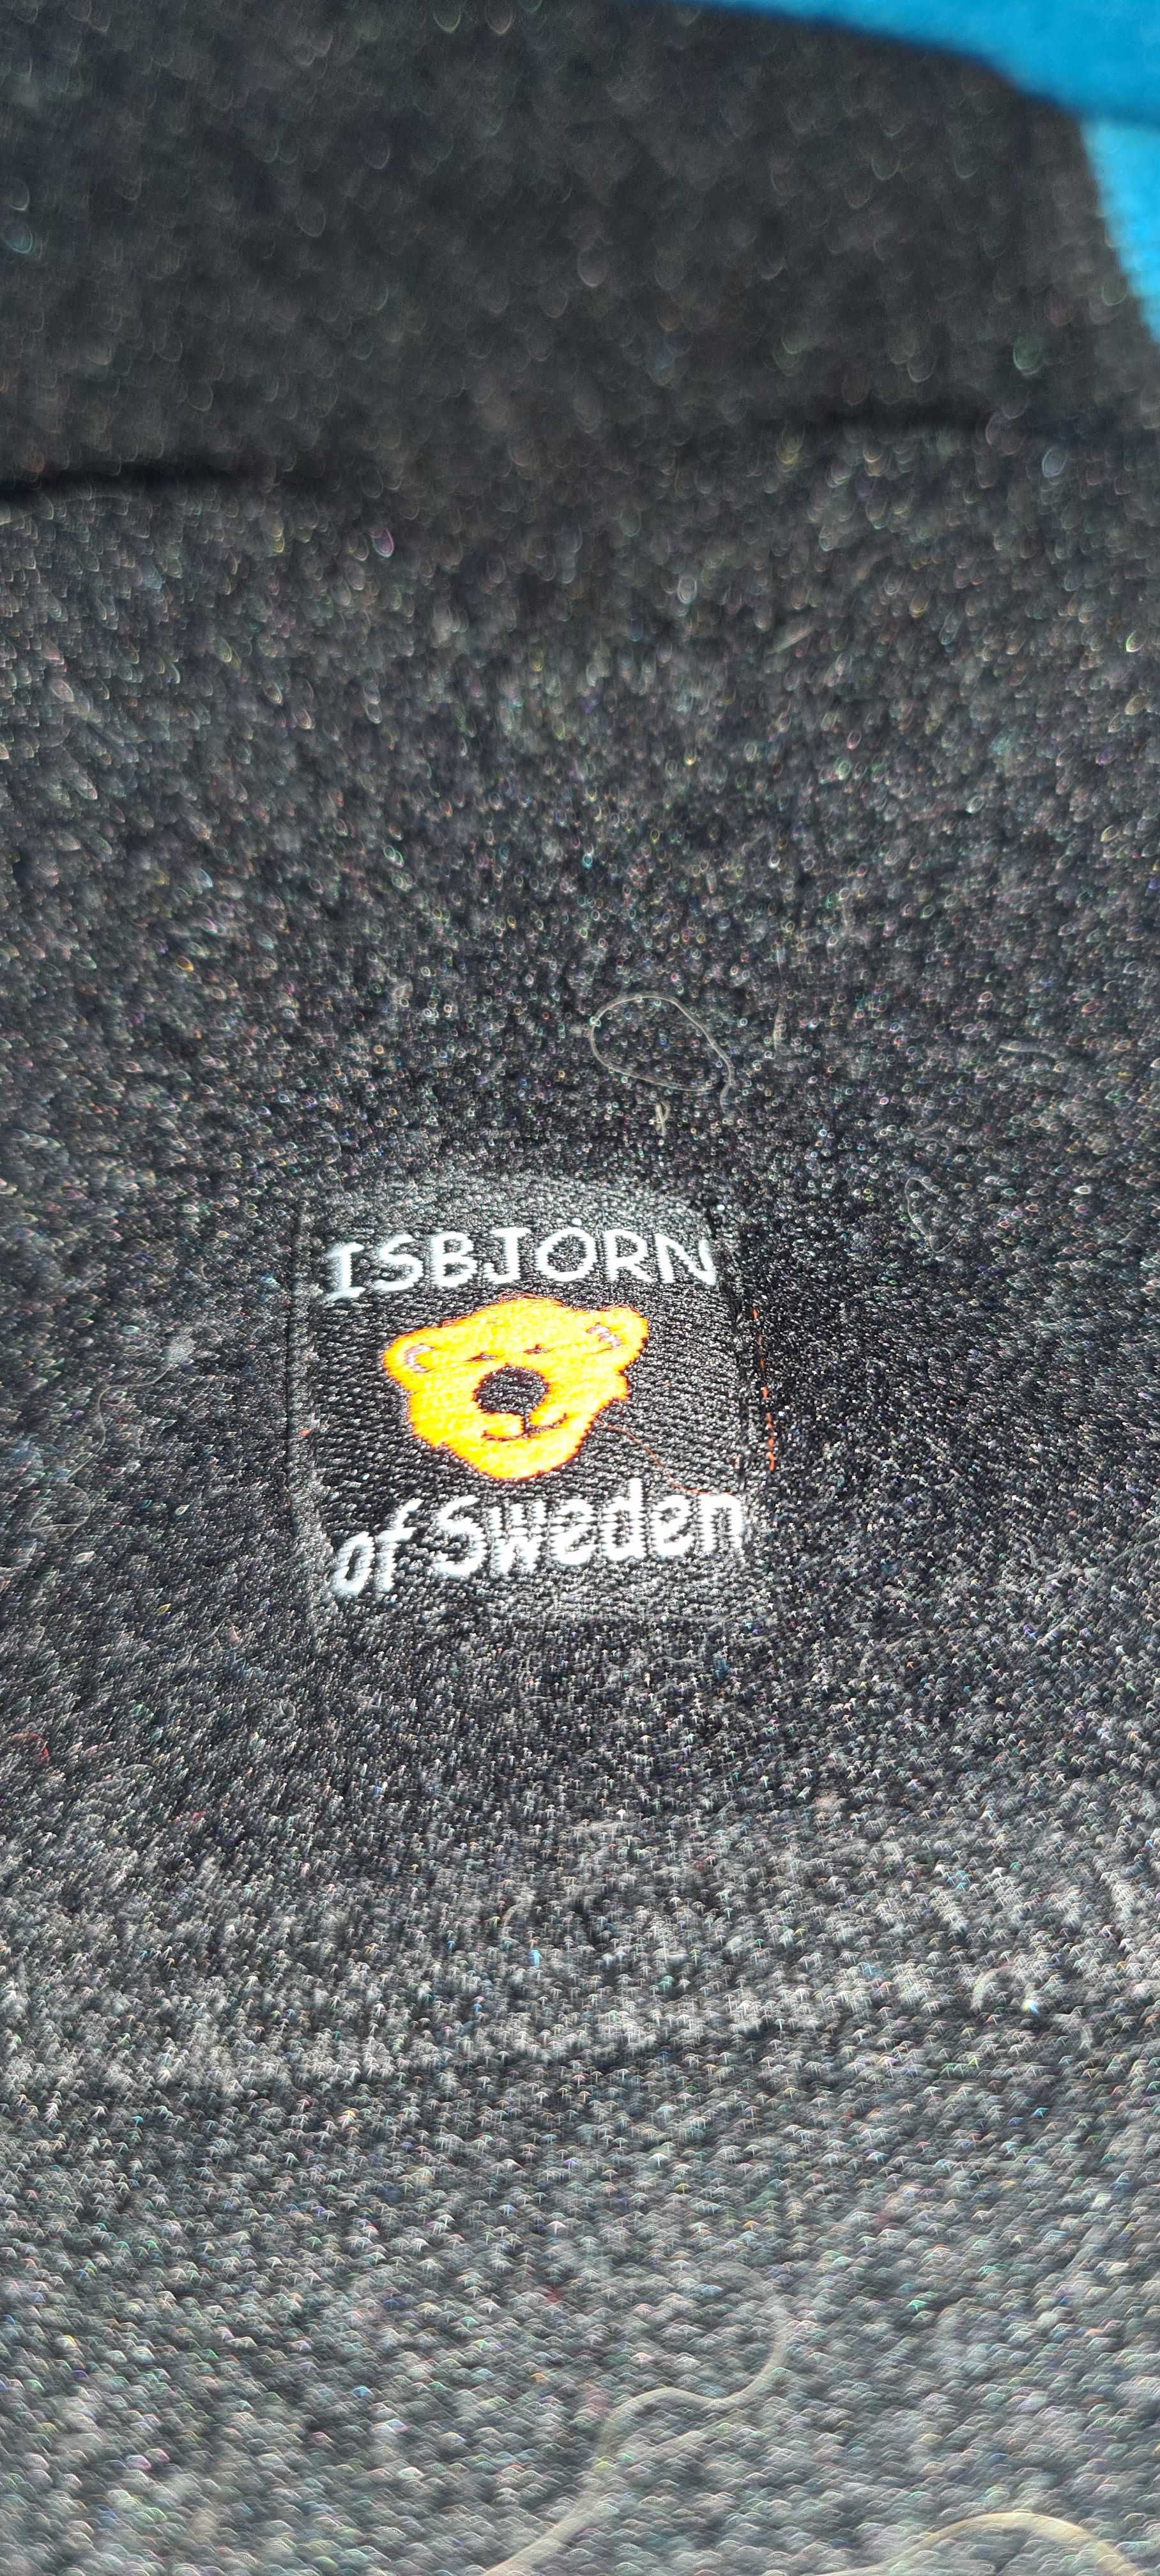 Isbjörn of Sweden r. 62/68 polarowy kombinezon jak reima helly hansen